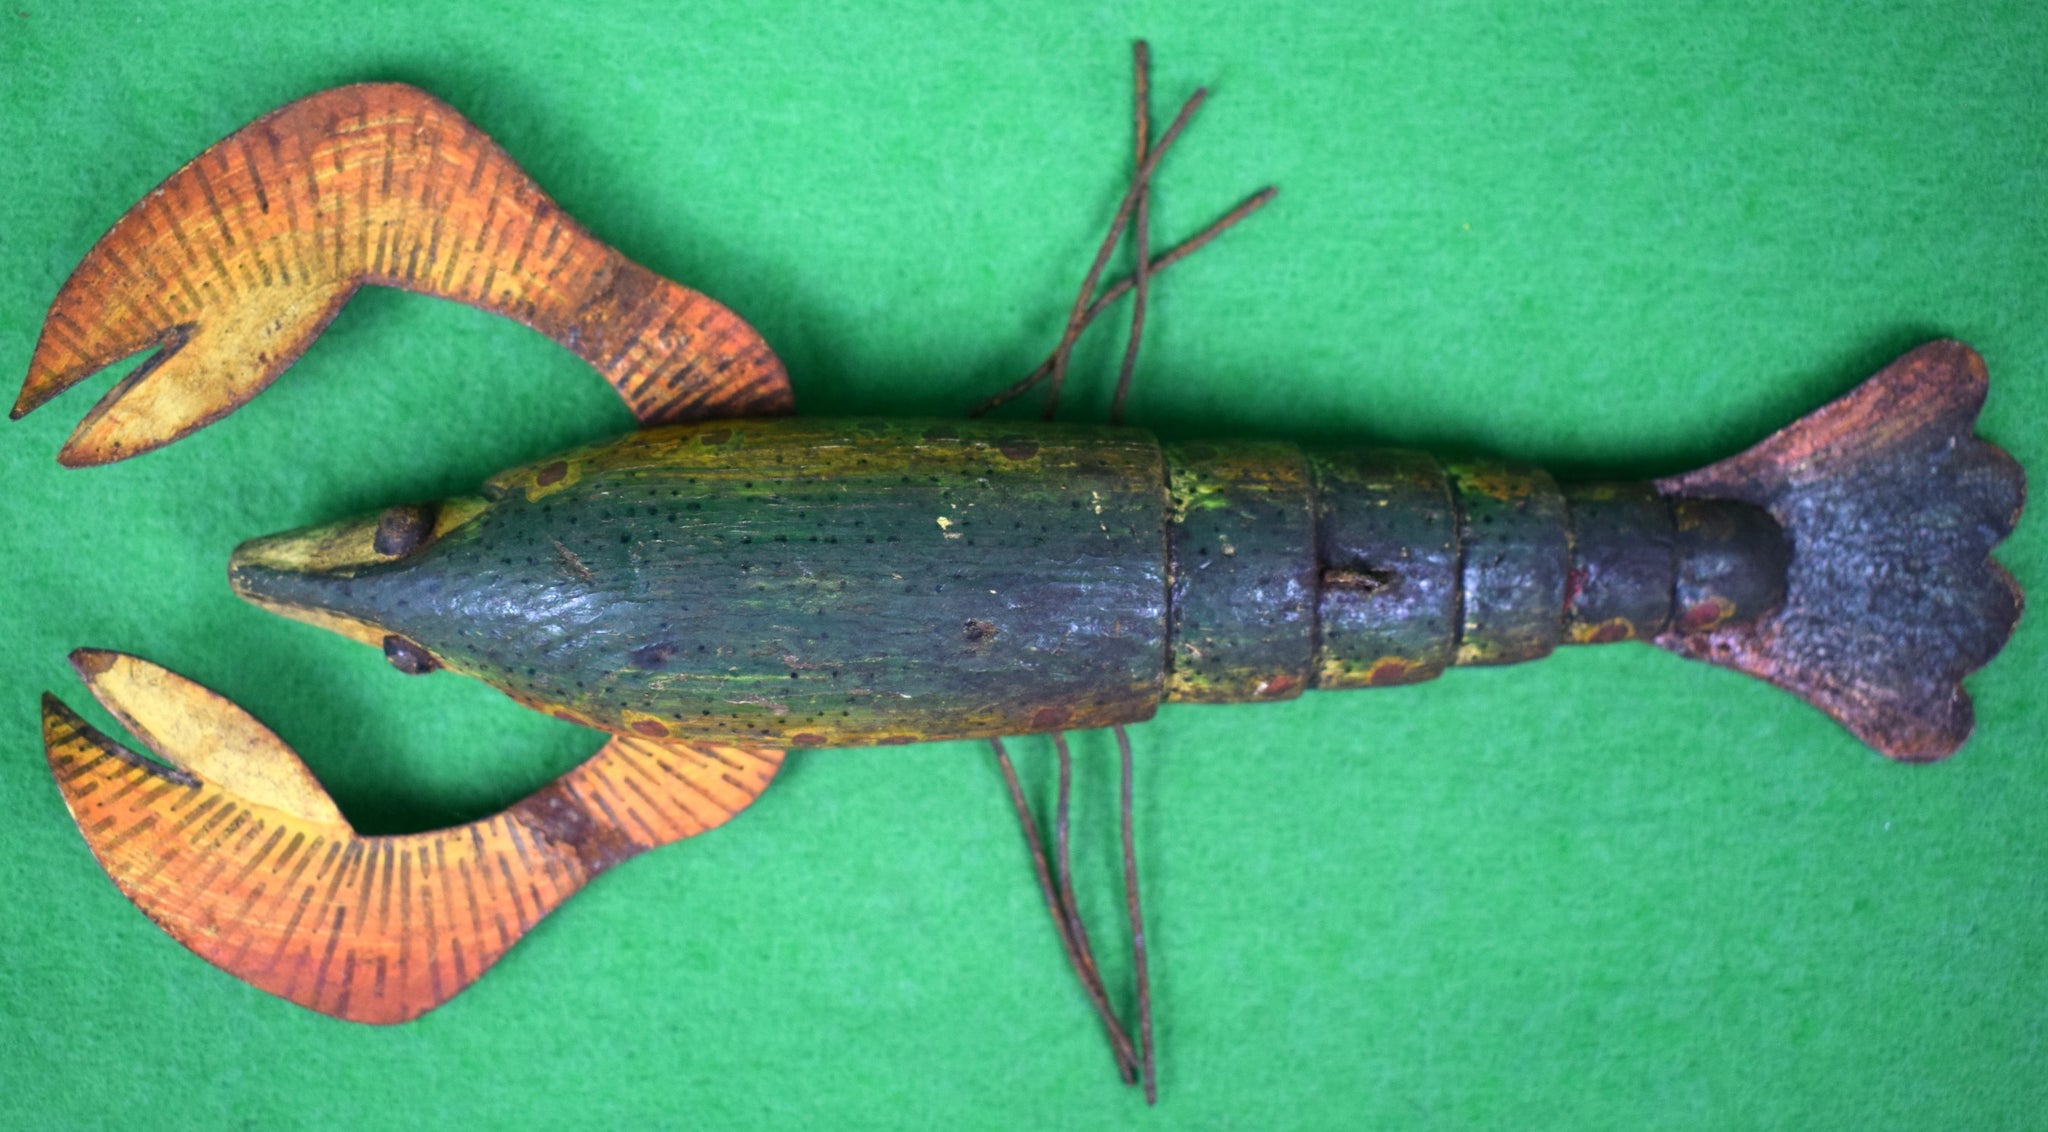 Vintage Lobster Fish Spear Decoy - Ice Fishing Lure MN Folk Art